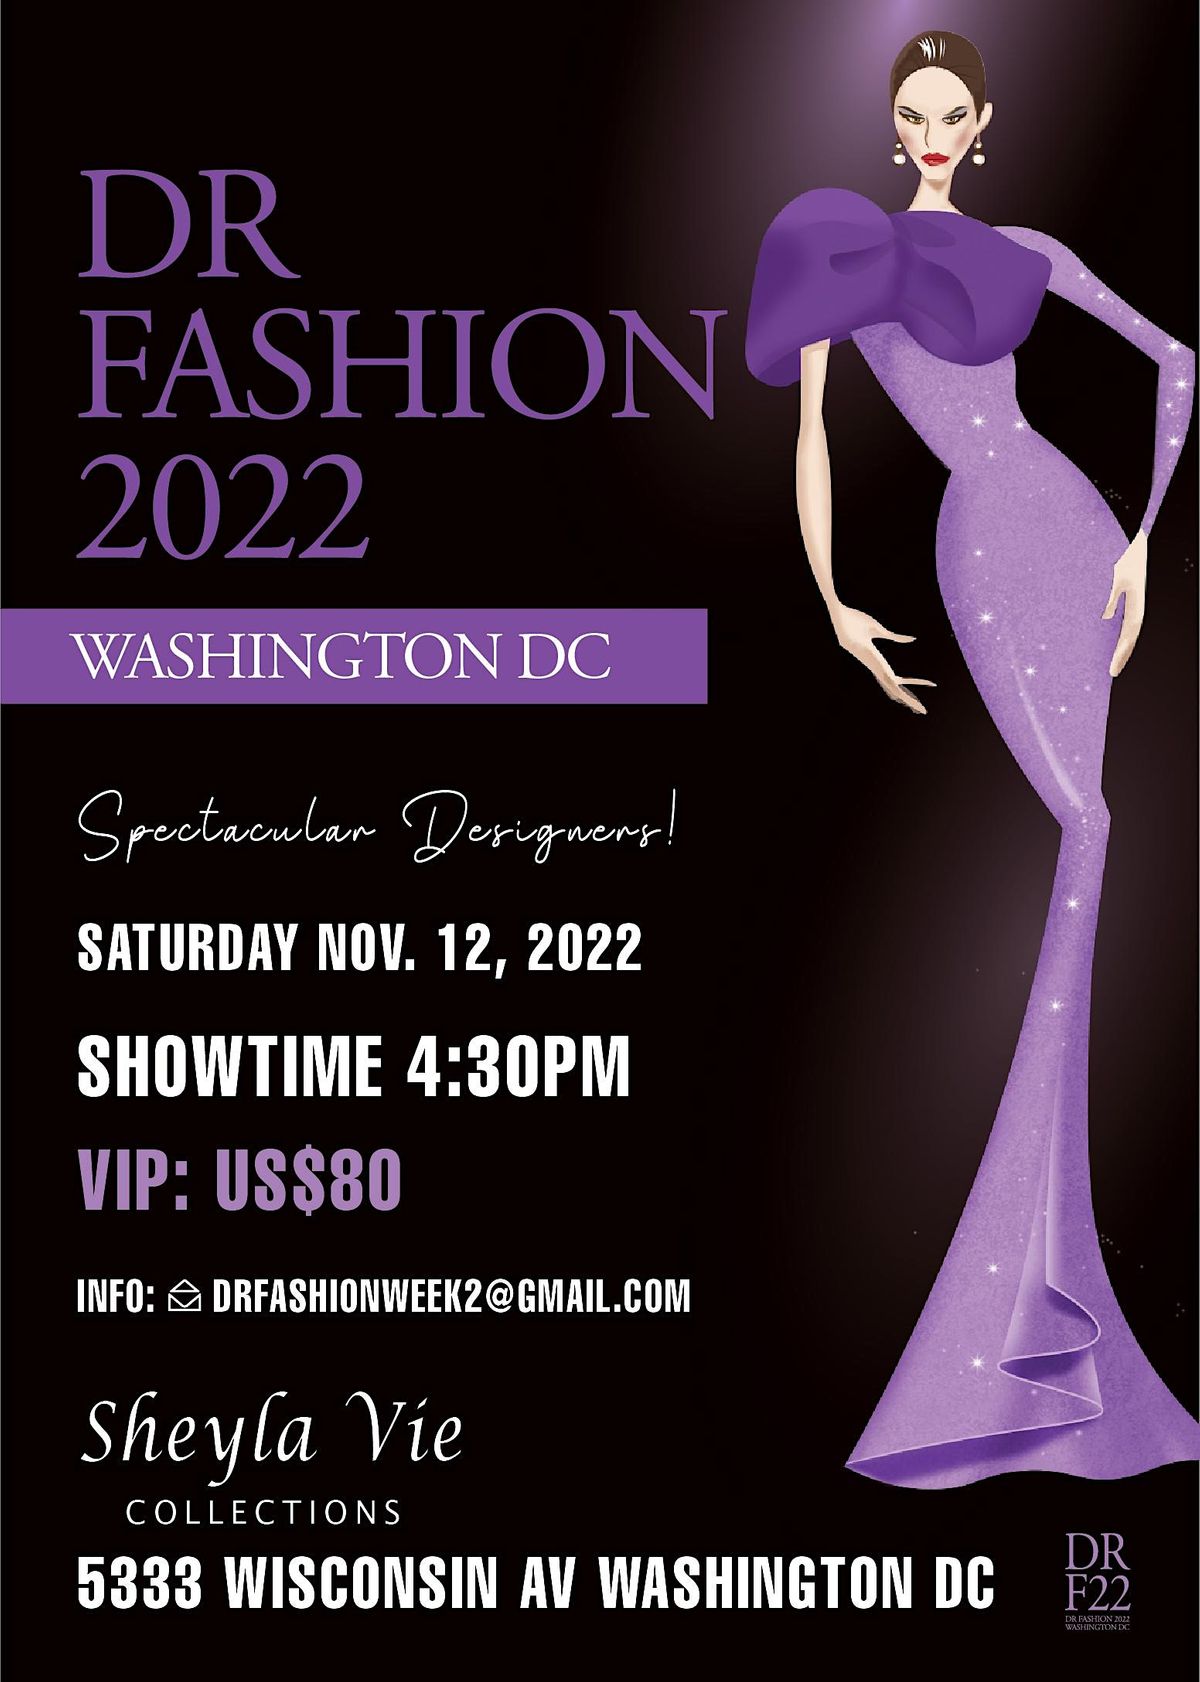 DR FASHION 2022 WASHINGTON, DC